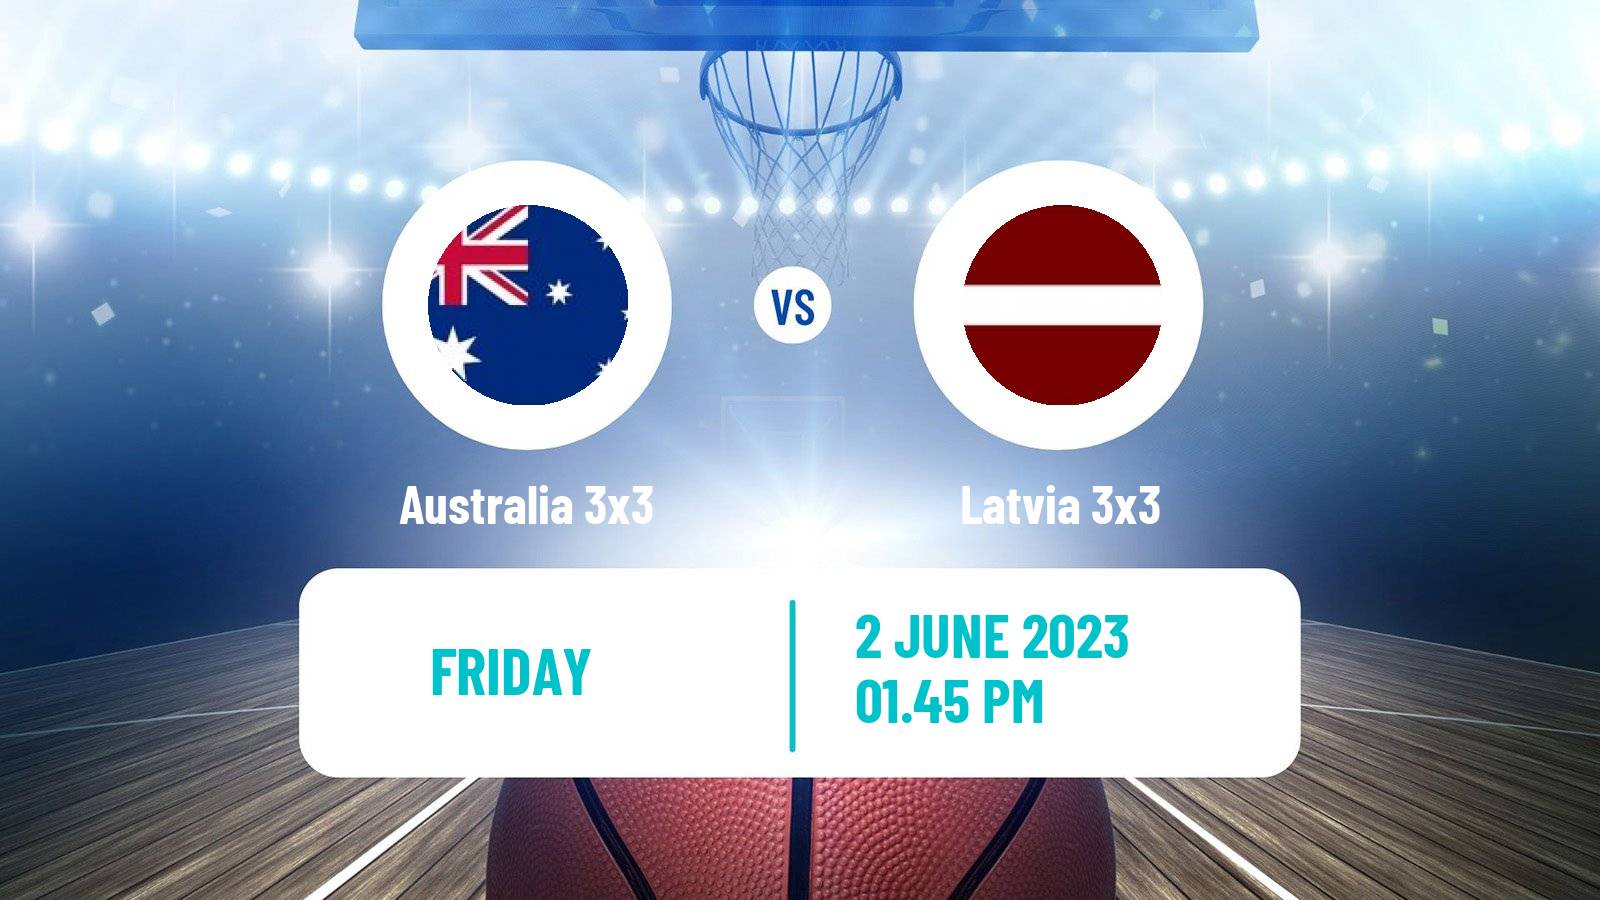 Basketball World Cup Basketball 3x3 Australia 3x3 - Latvia 3x3